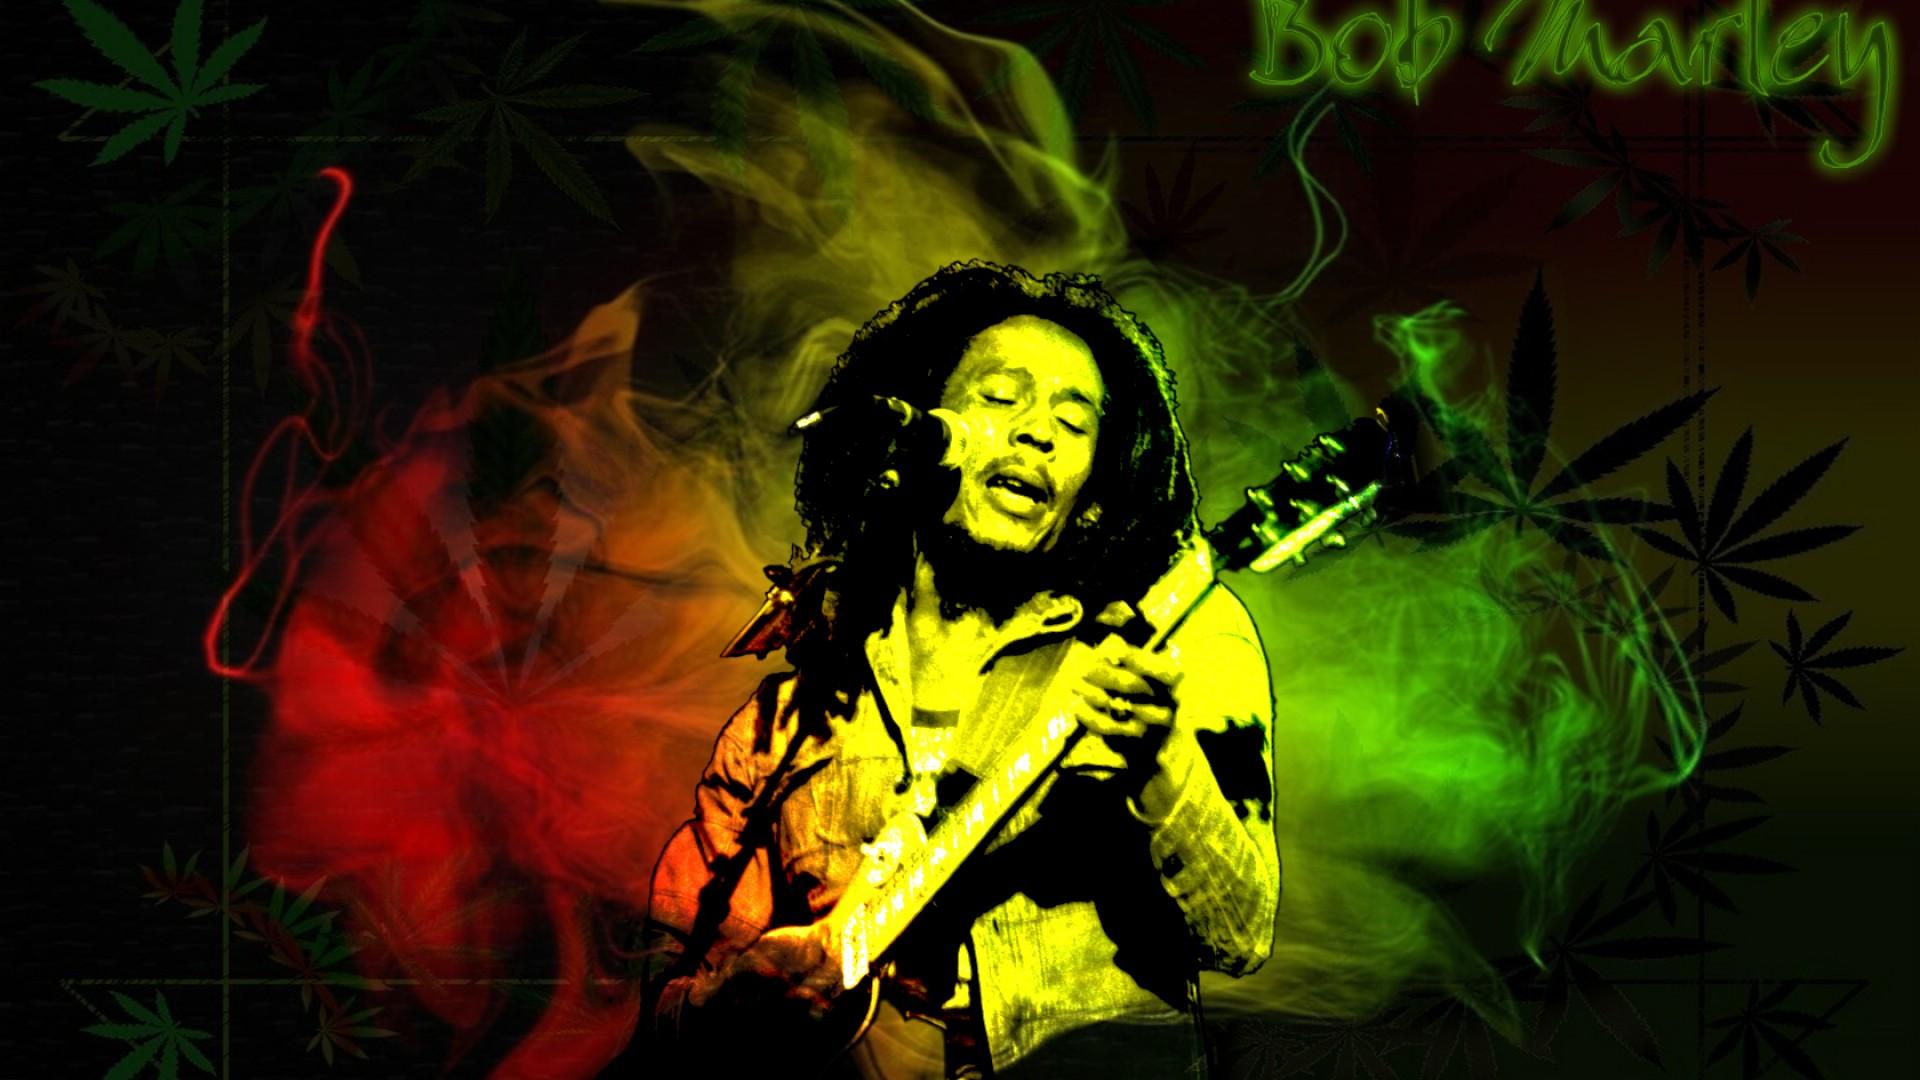 Free download Bob Marley HD Wallpaper for desktop download